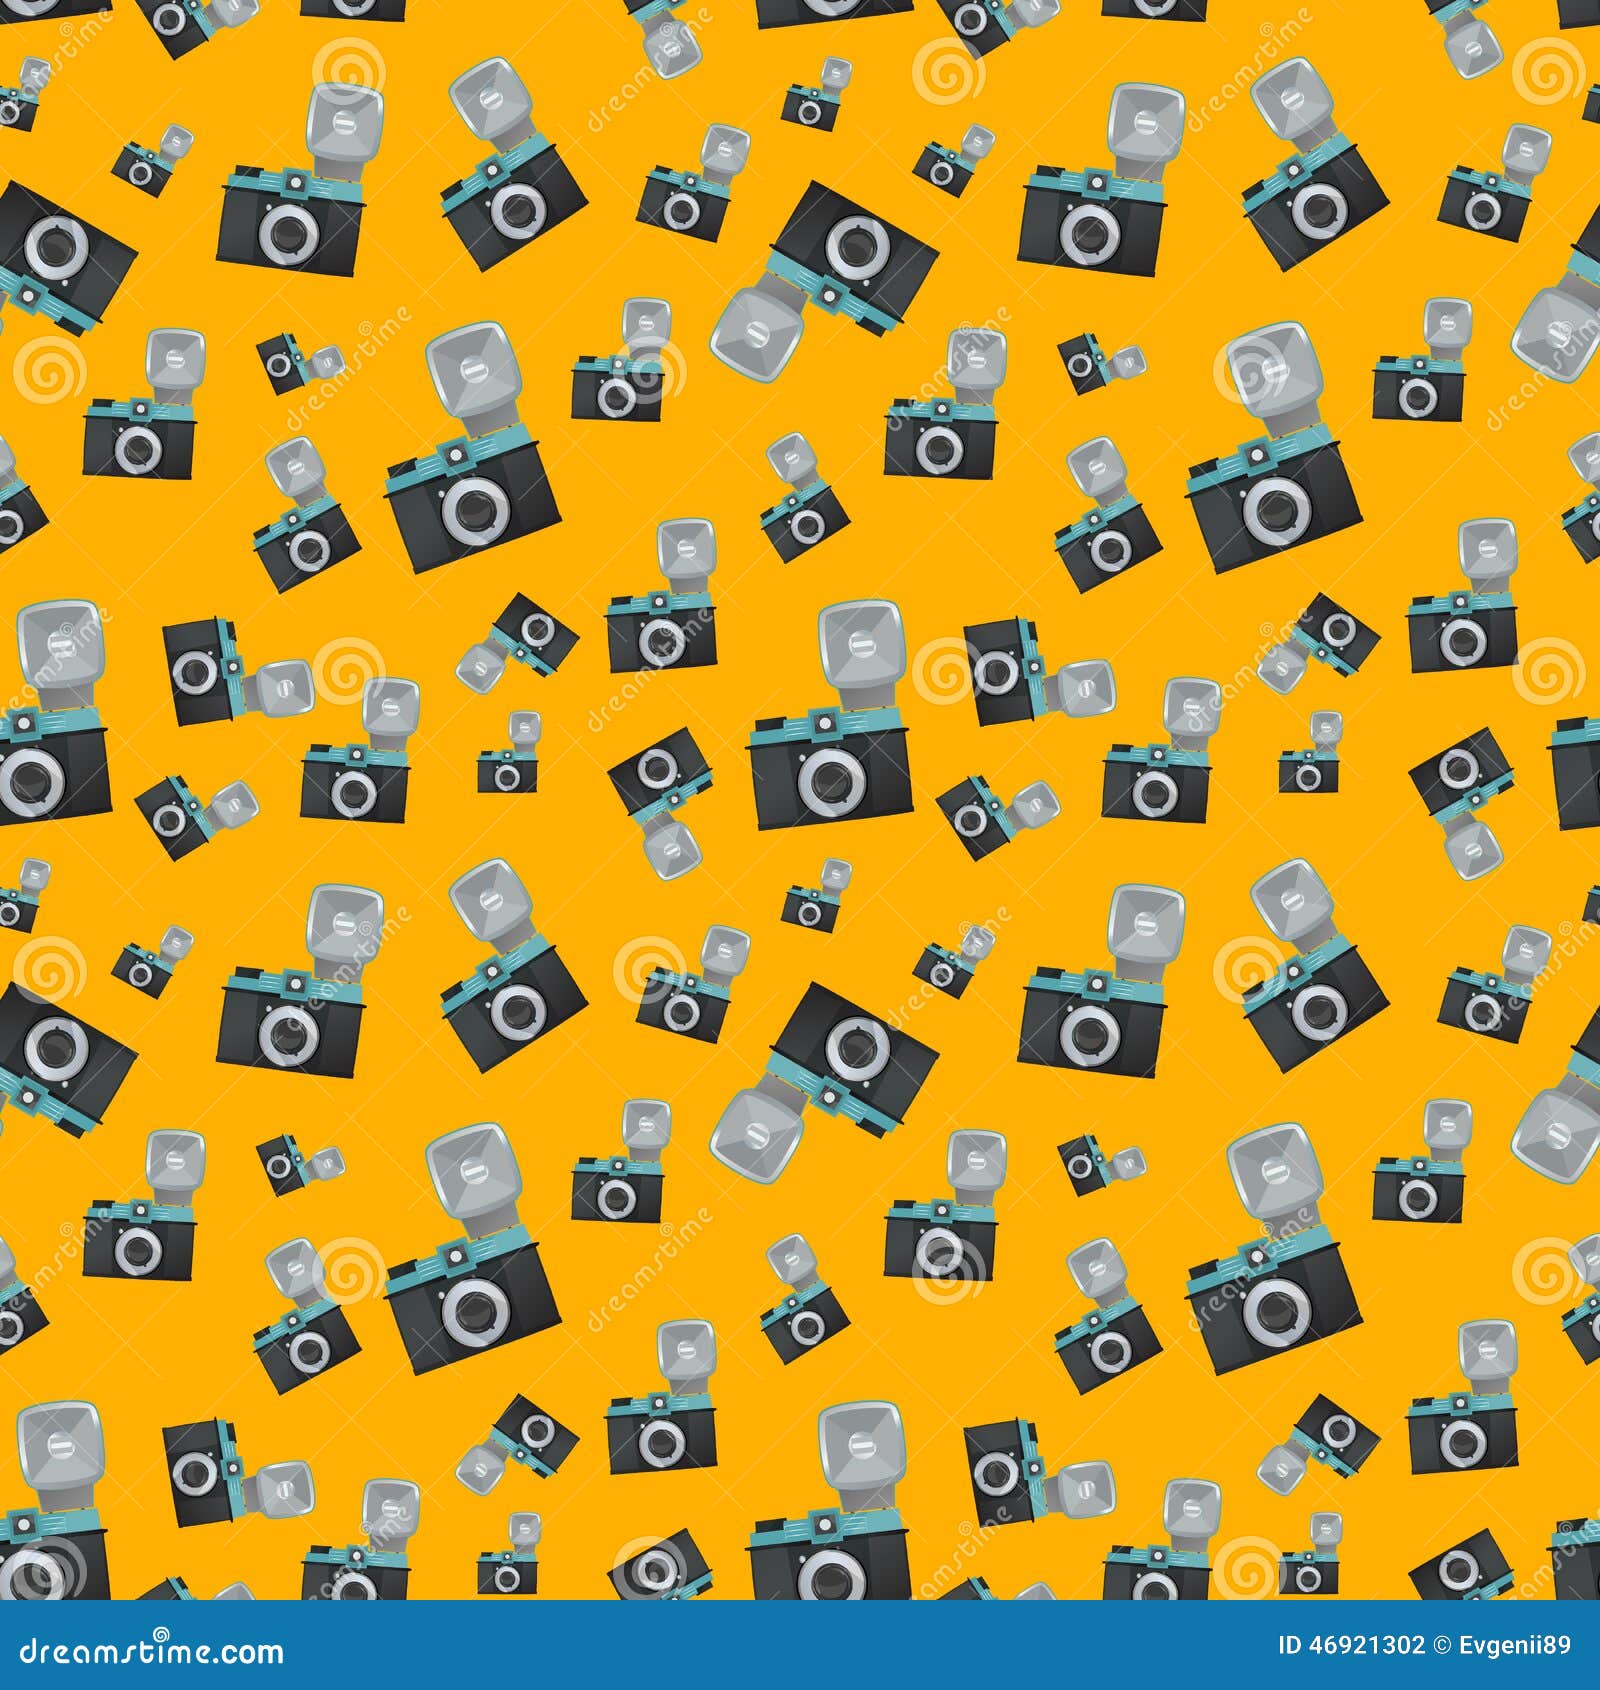 lomography film camera on orange background